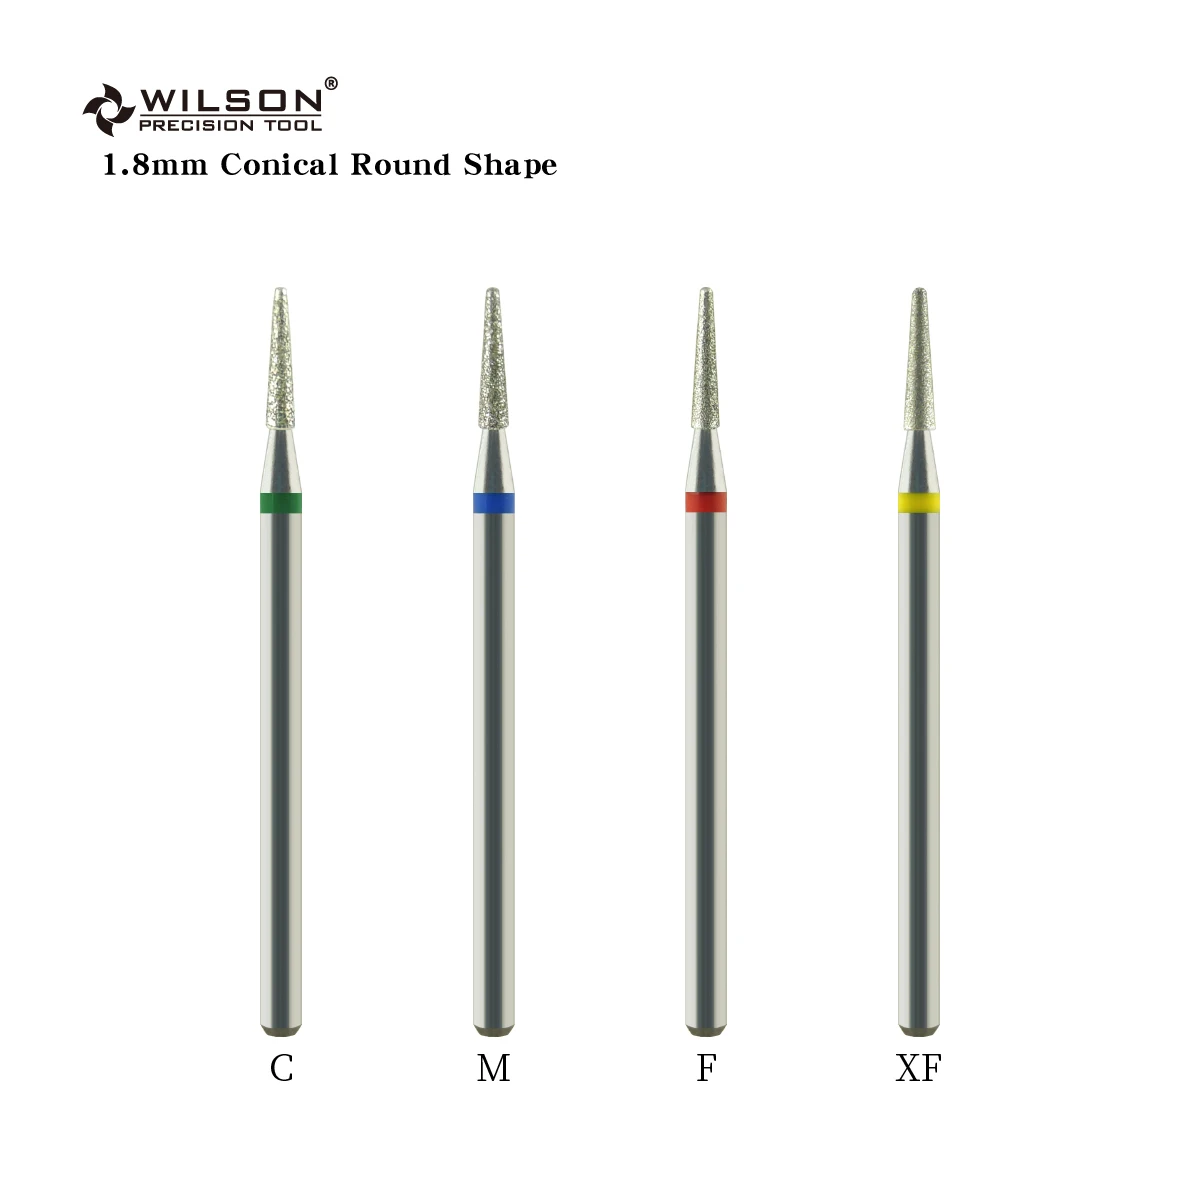 

1.8mm Conical Round Shape Diamond Bits nail drill bits WILSON PRECISION TOOL